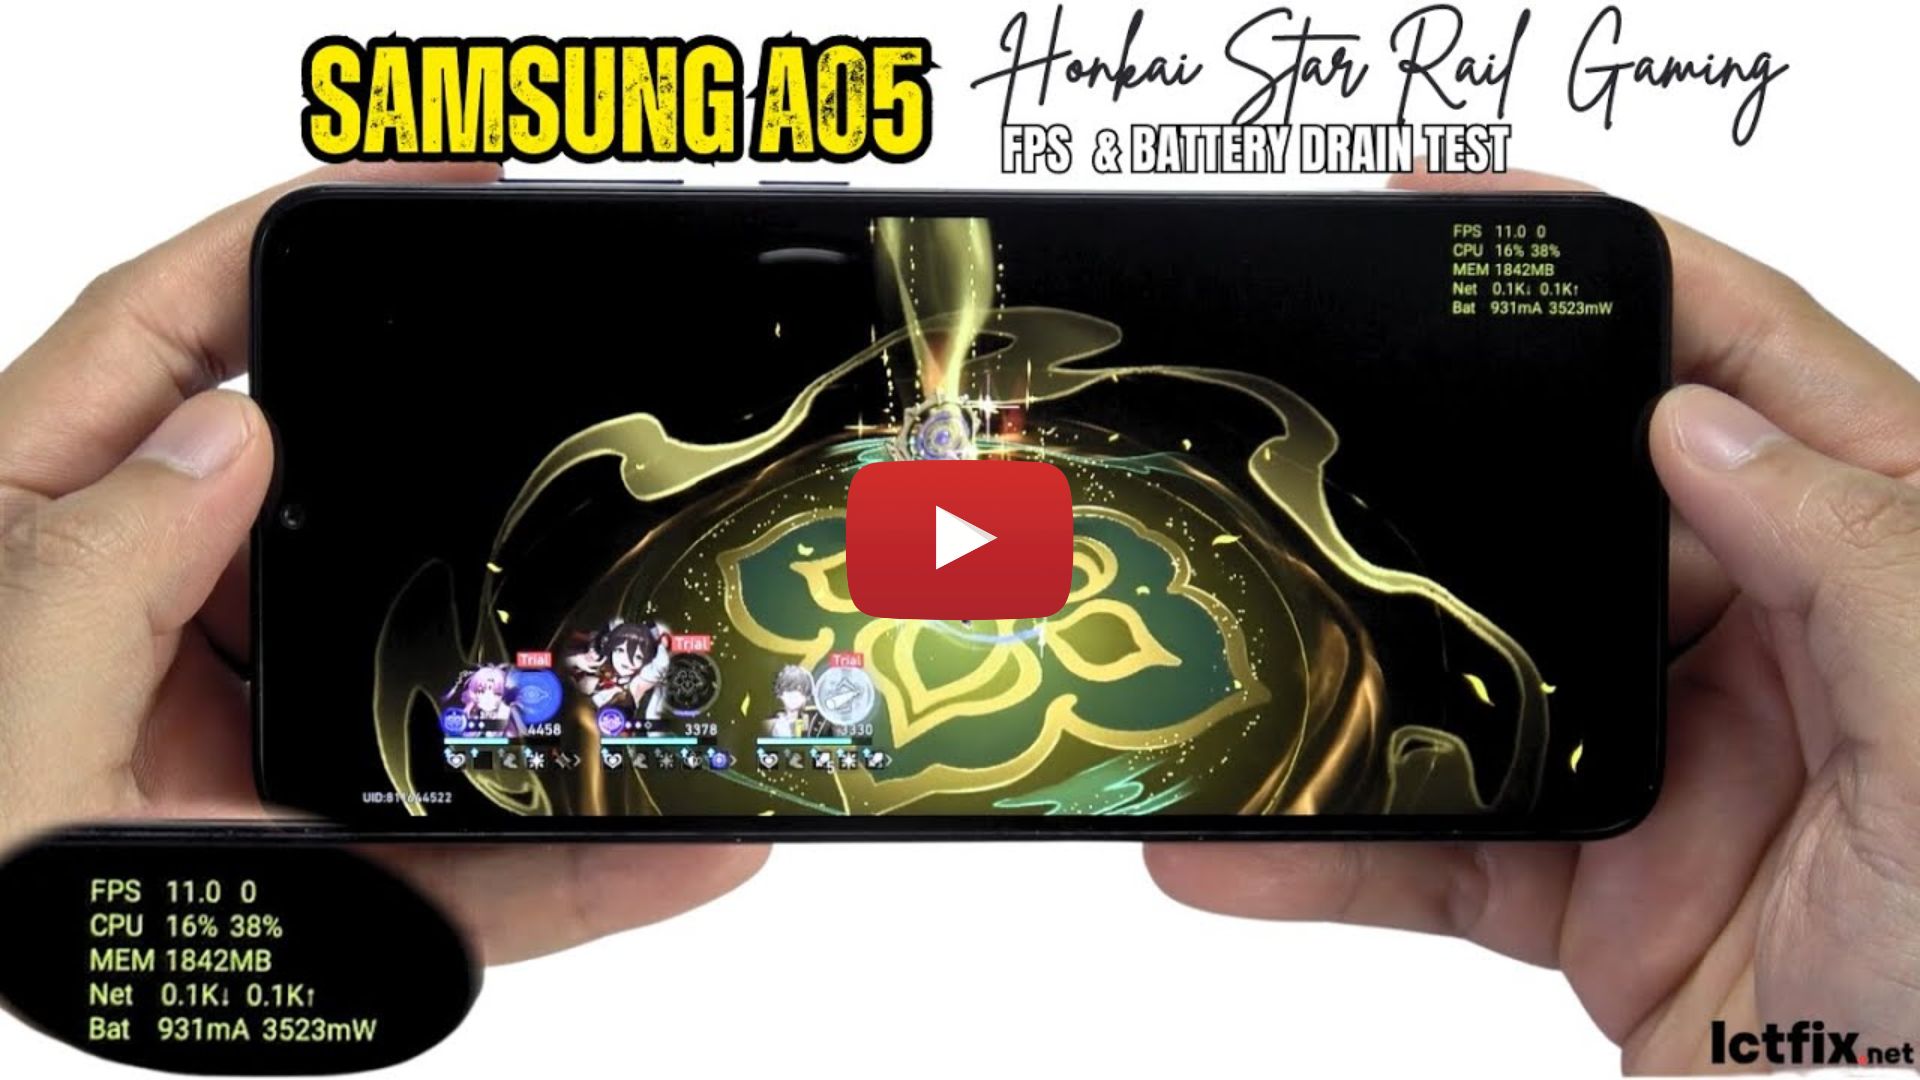 Samsung Galaxy A03 Genshin Impact Gaming test